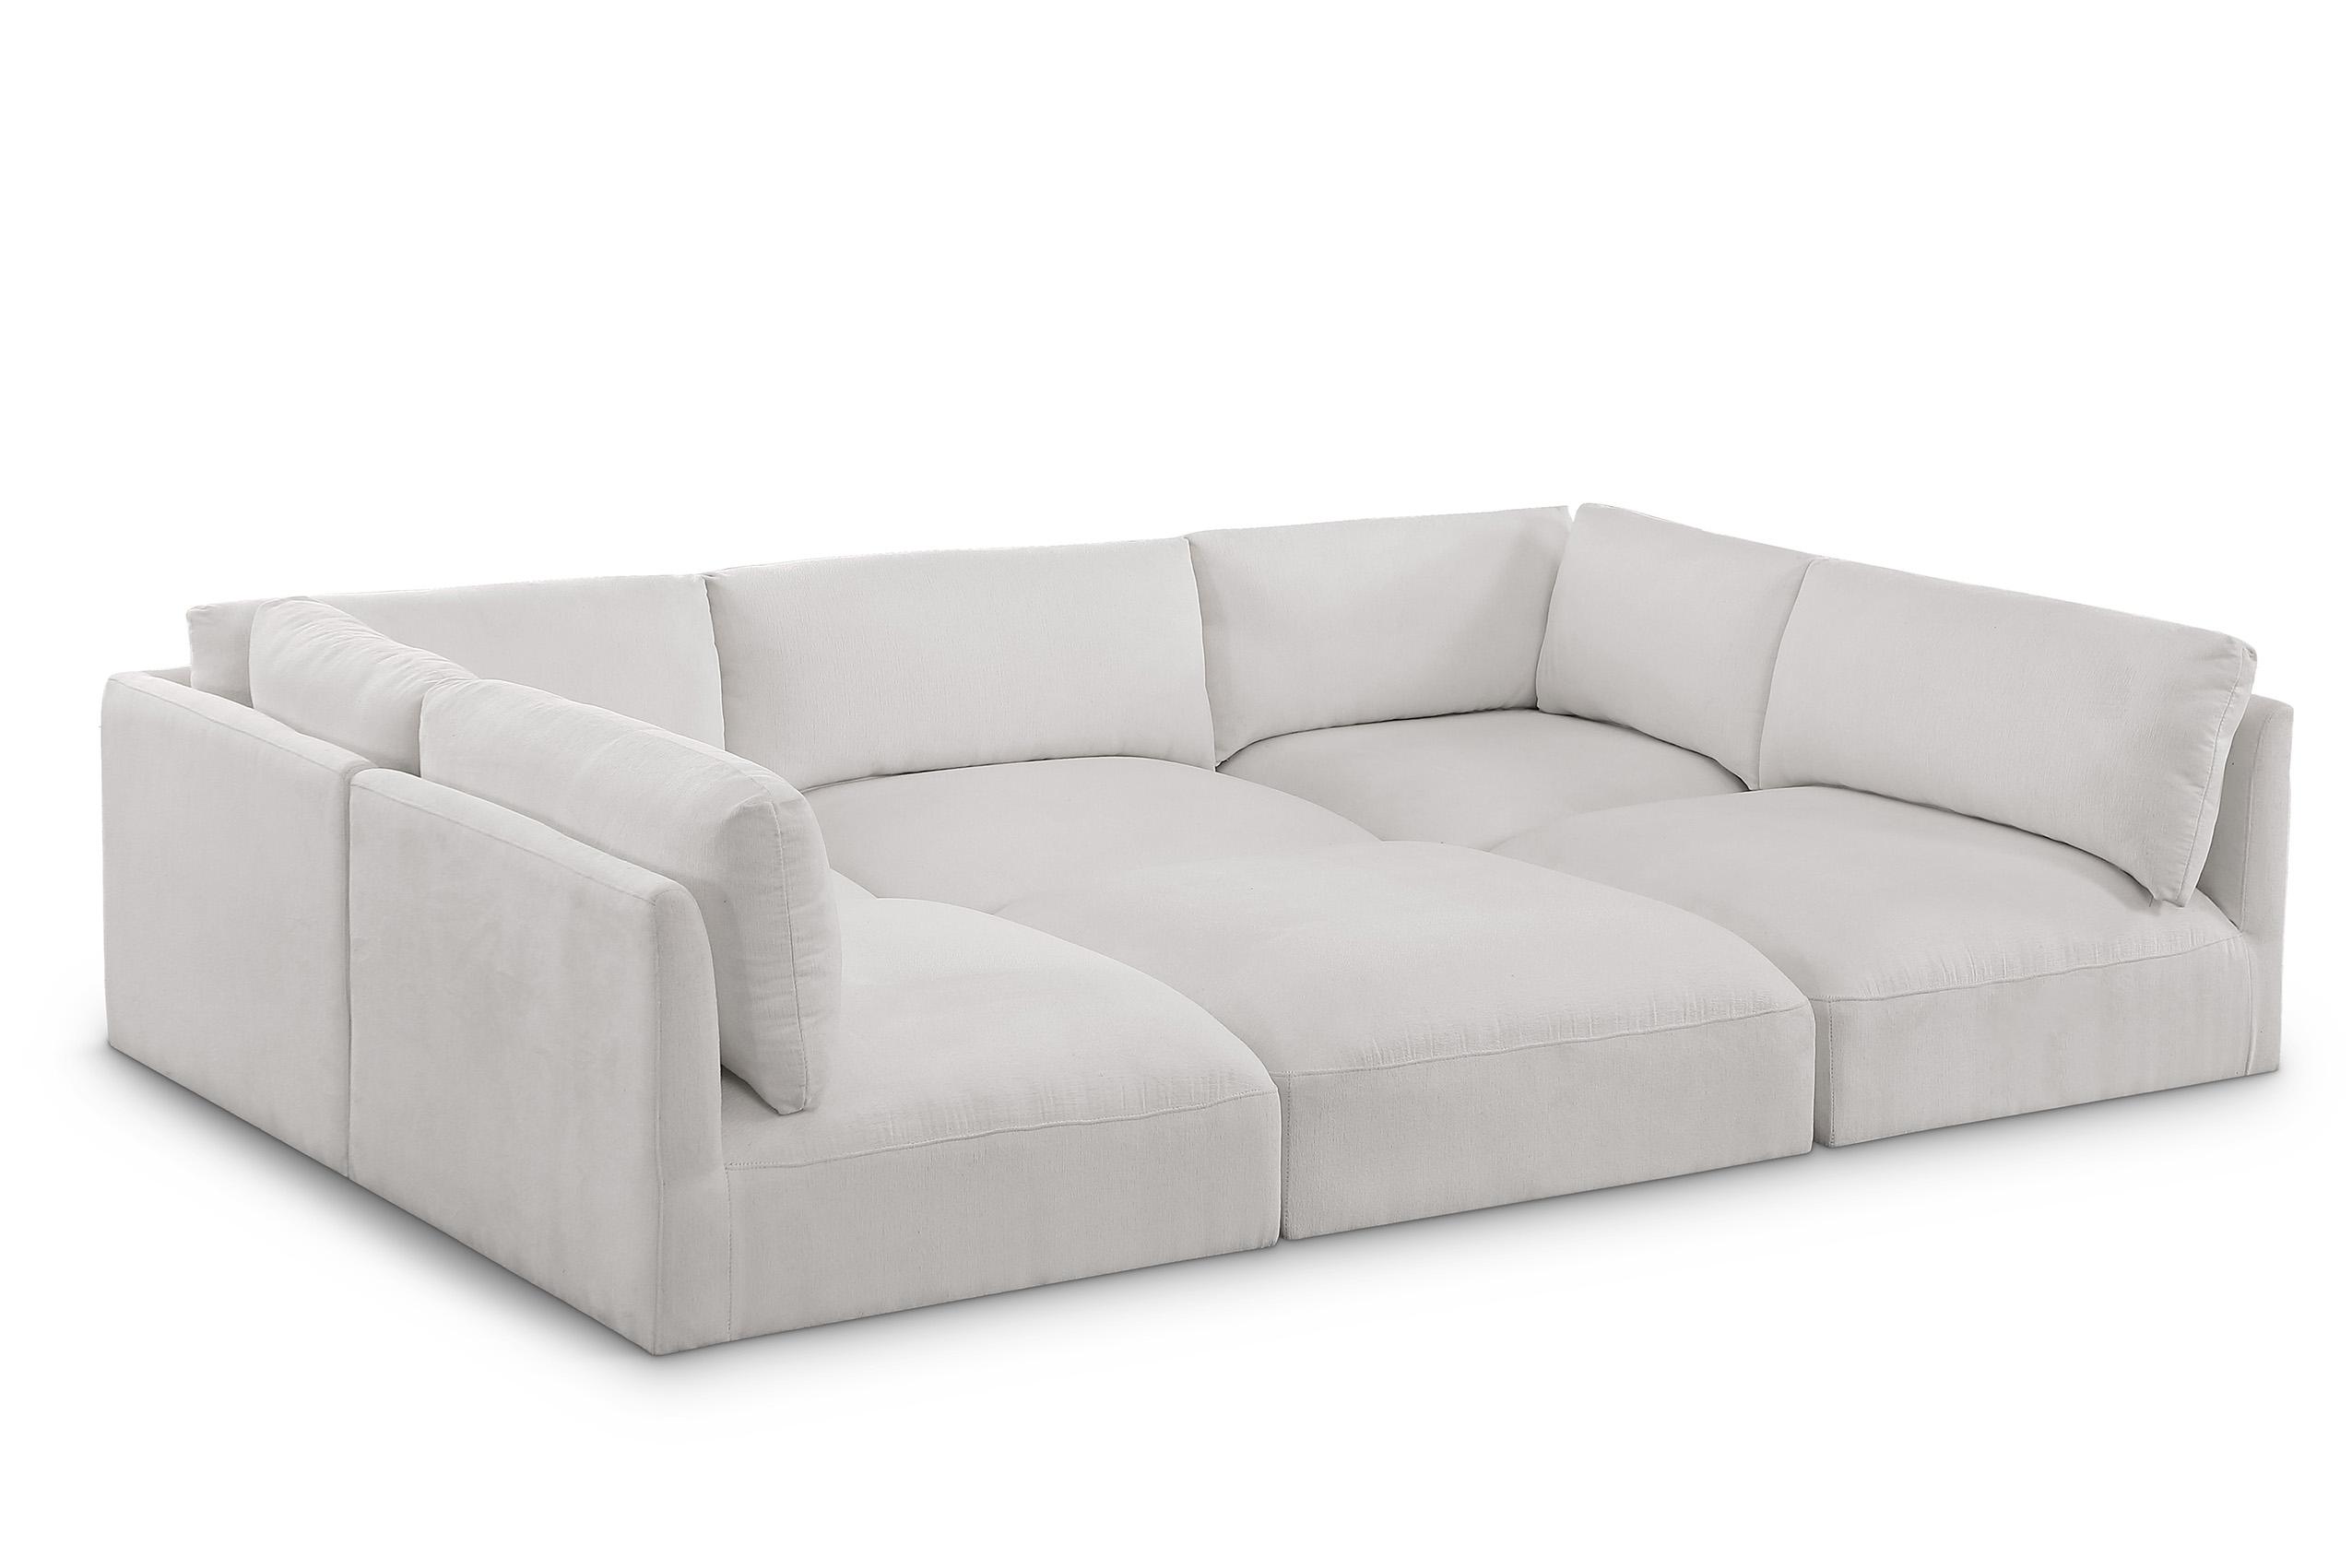 Contemporary, Modern Modular Sectional Sofa EASE 696Cream-Sec6B 696Cream-Sec6B in Cream Fabric